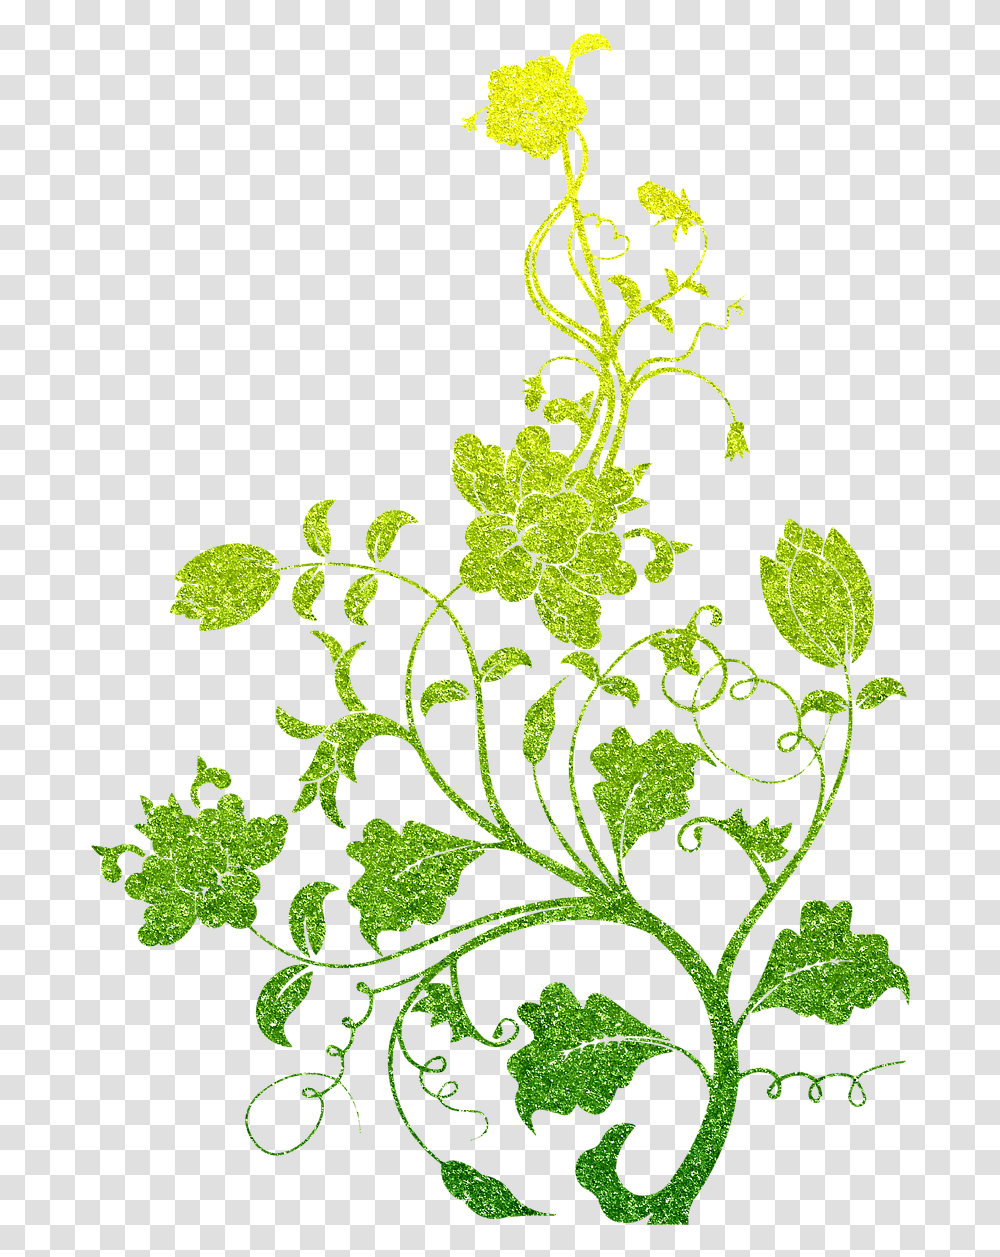 Flower Line Art Silhouette Glitter Free Image On Pixabay Vintage Silueta De Flores, Graphics, Floral Design, Pattern, Rug Transparent Png